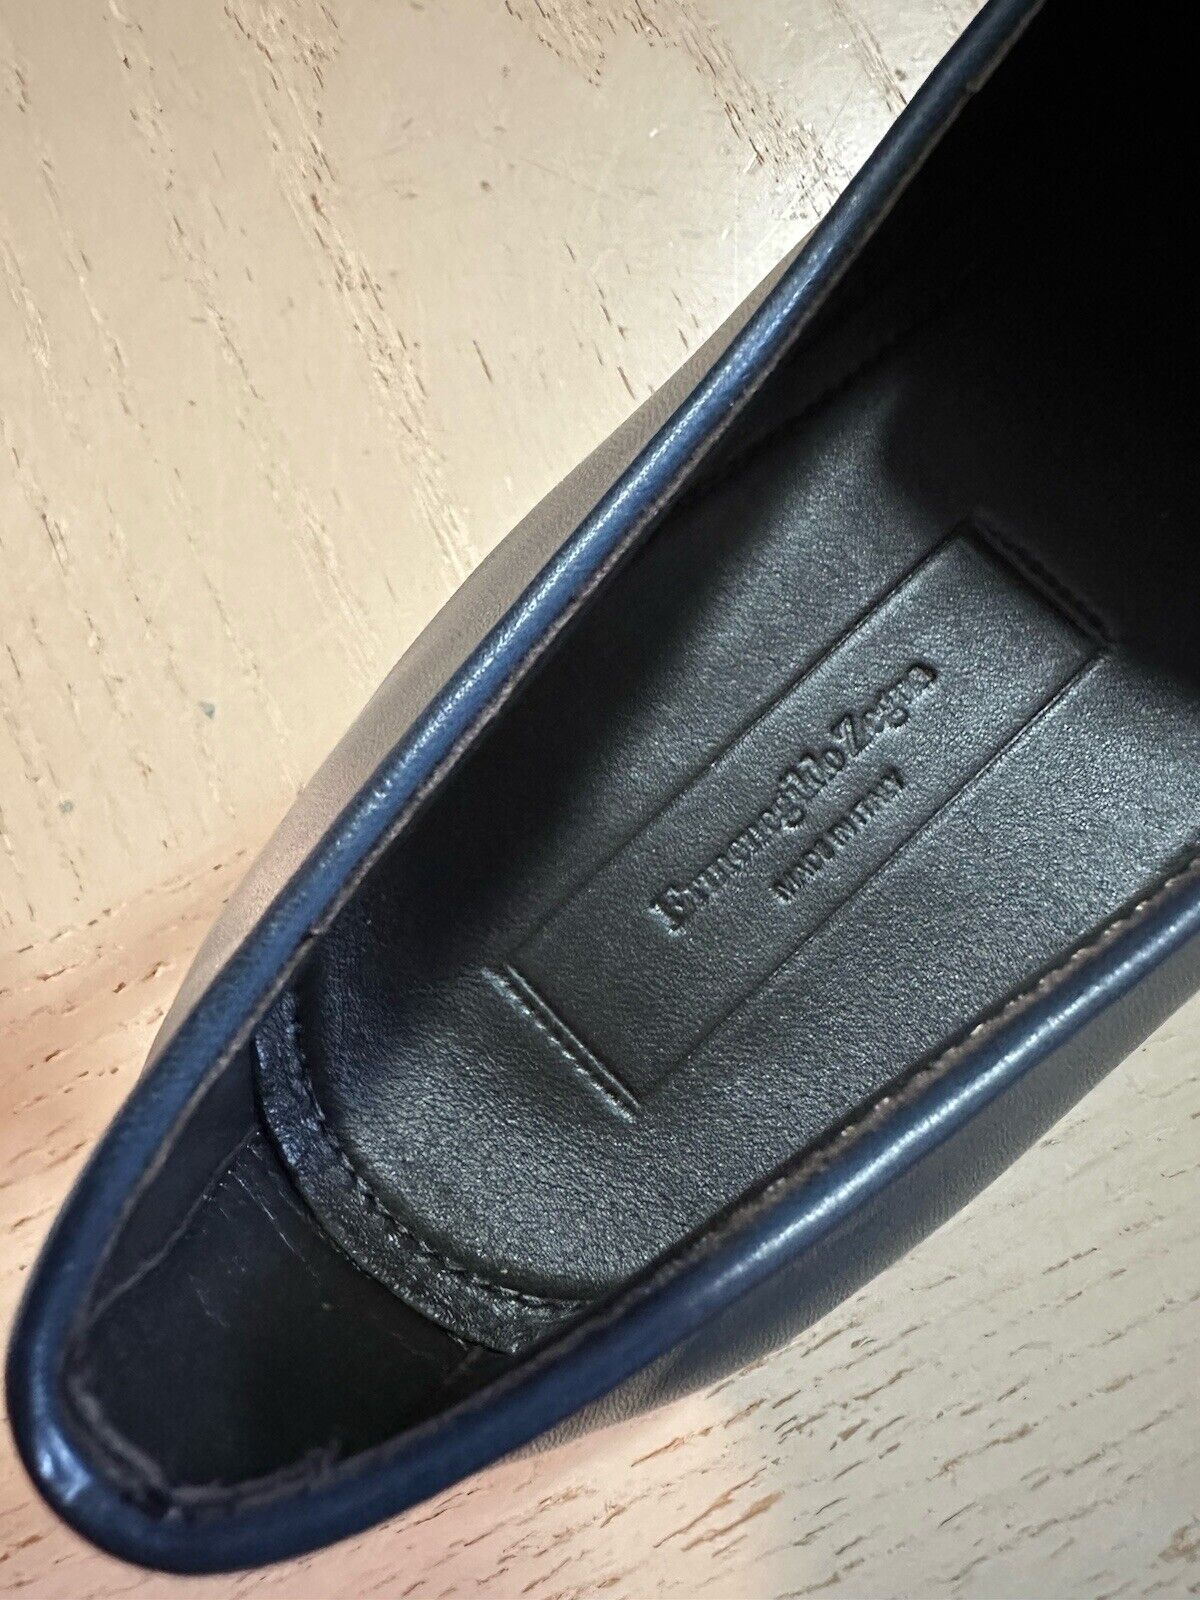 Ermenegildo Zegna Leather Reverse Construction Loafers DK Blue 11.5 US New $950